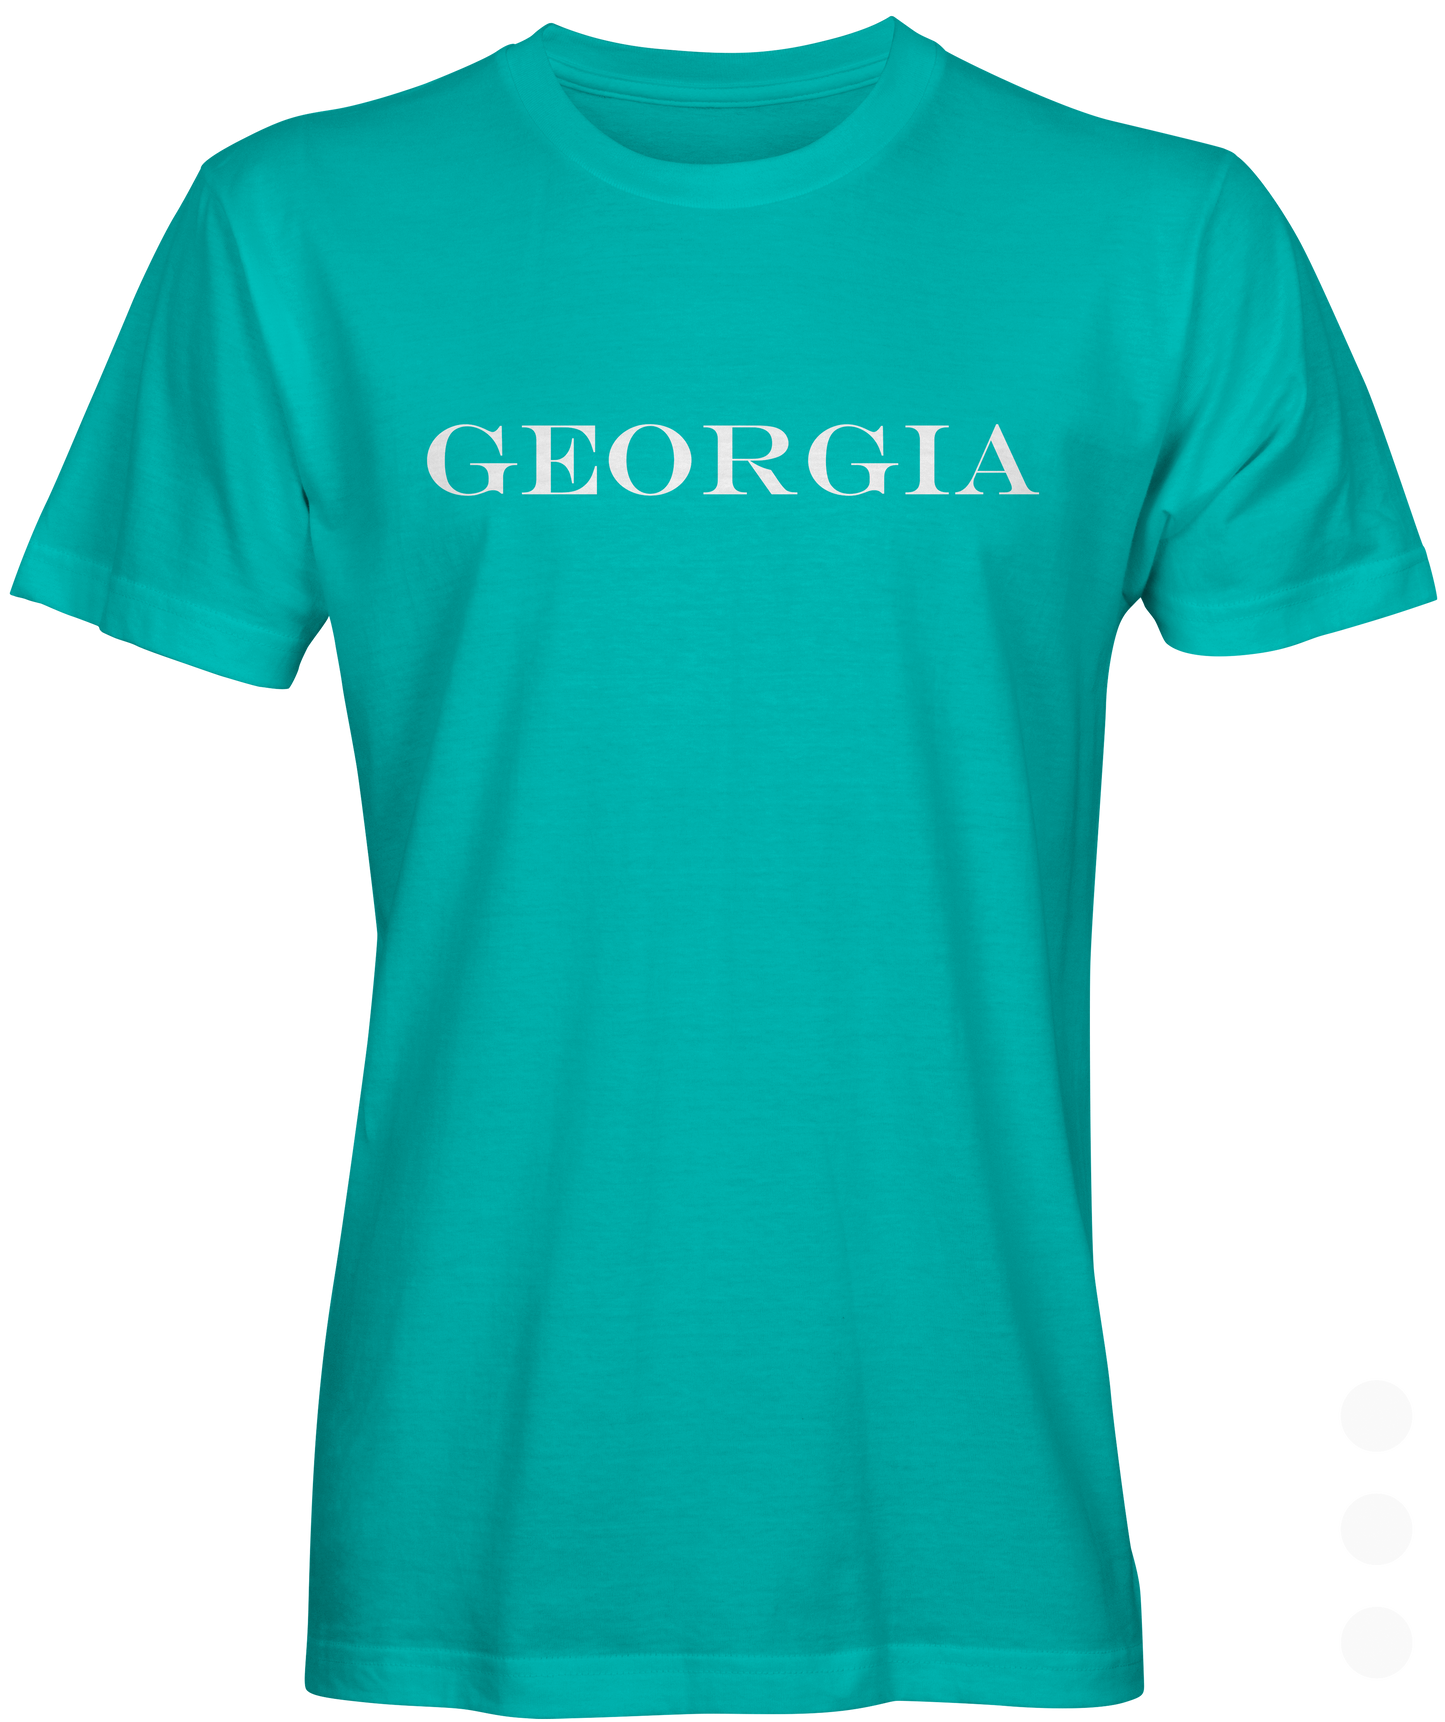 Teal Georgia T-shirt